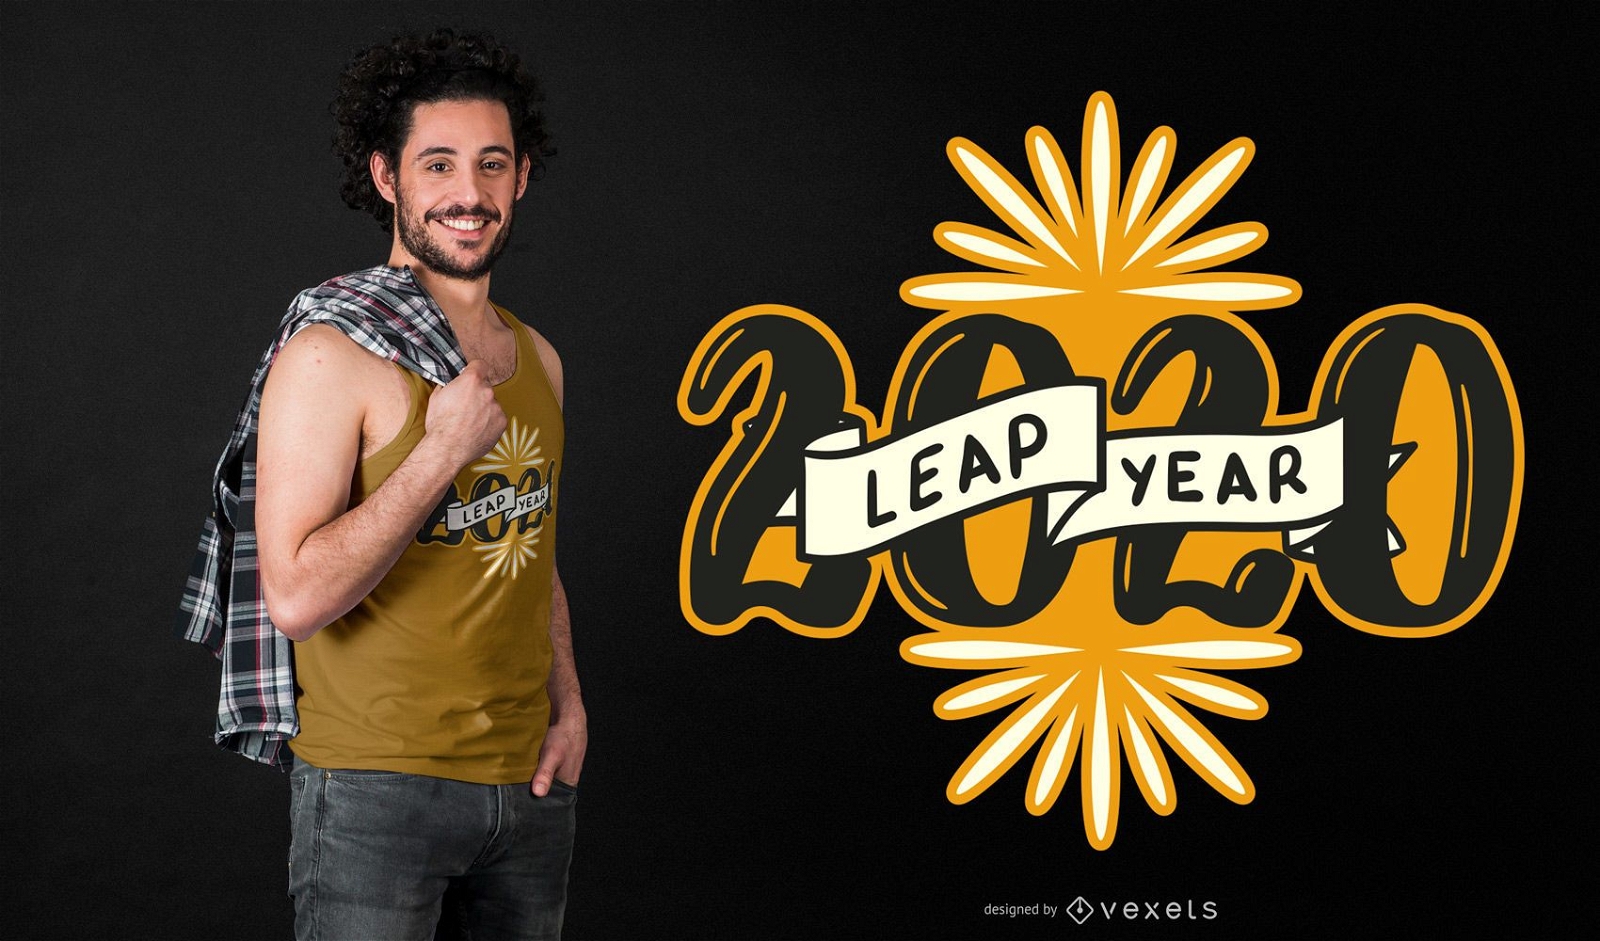 Leap year 2020 t-shirt design